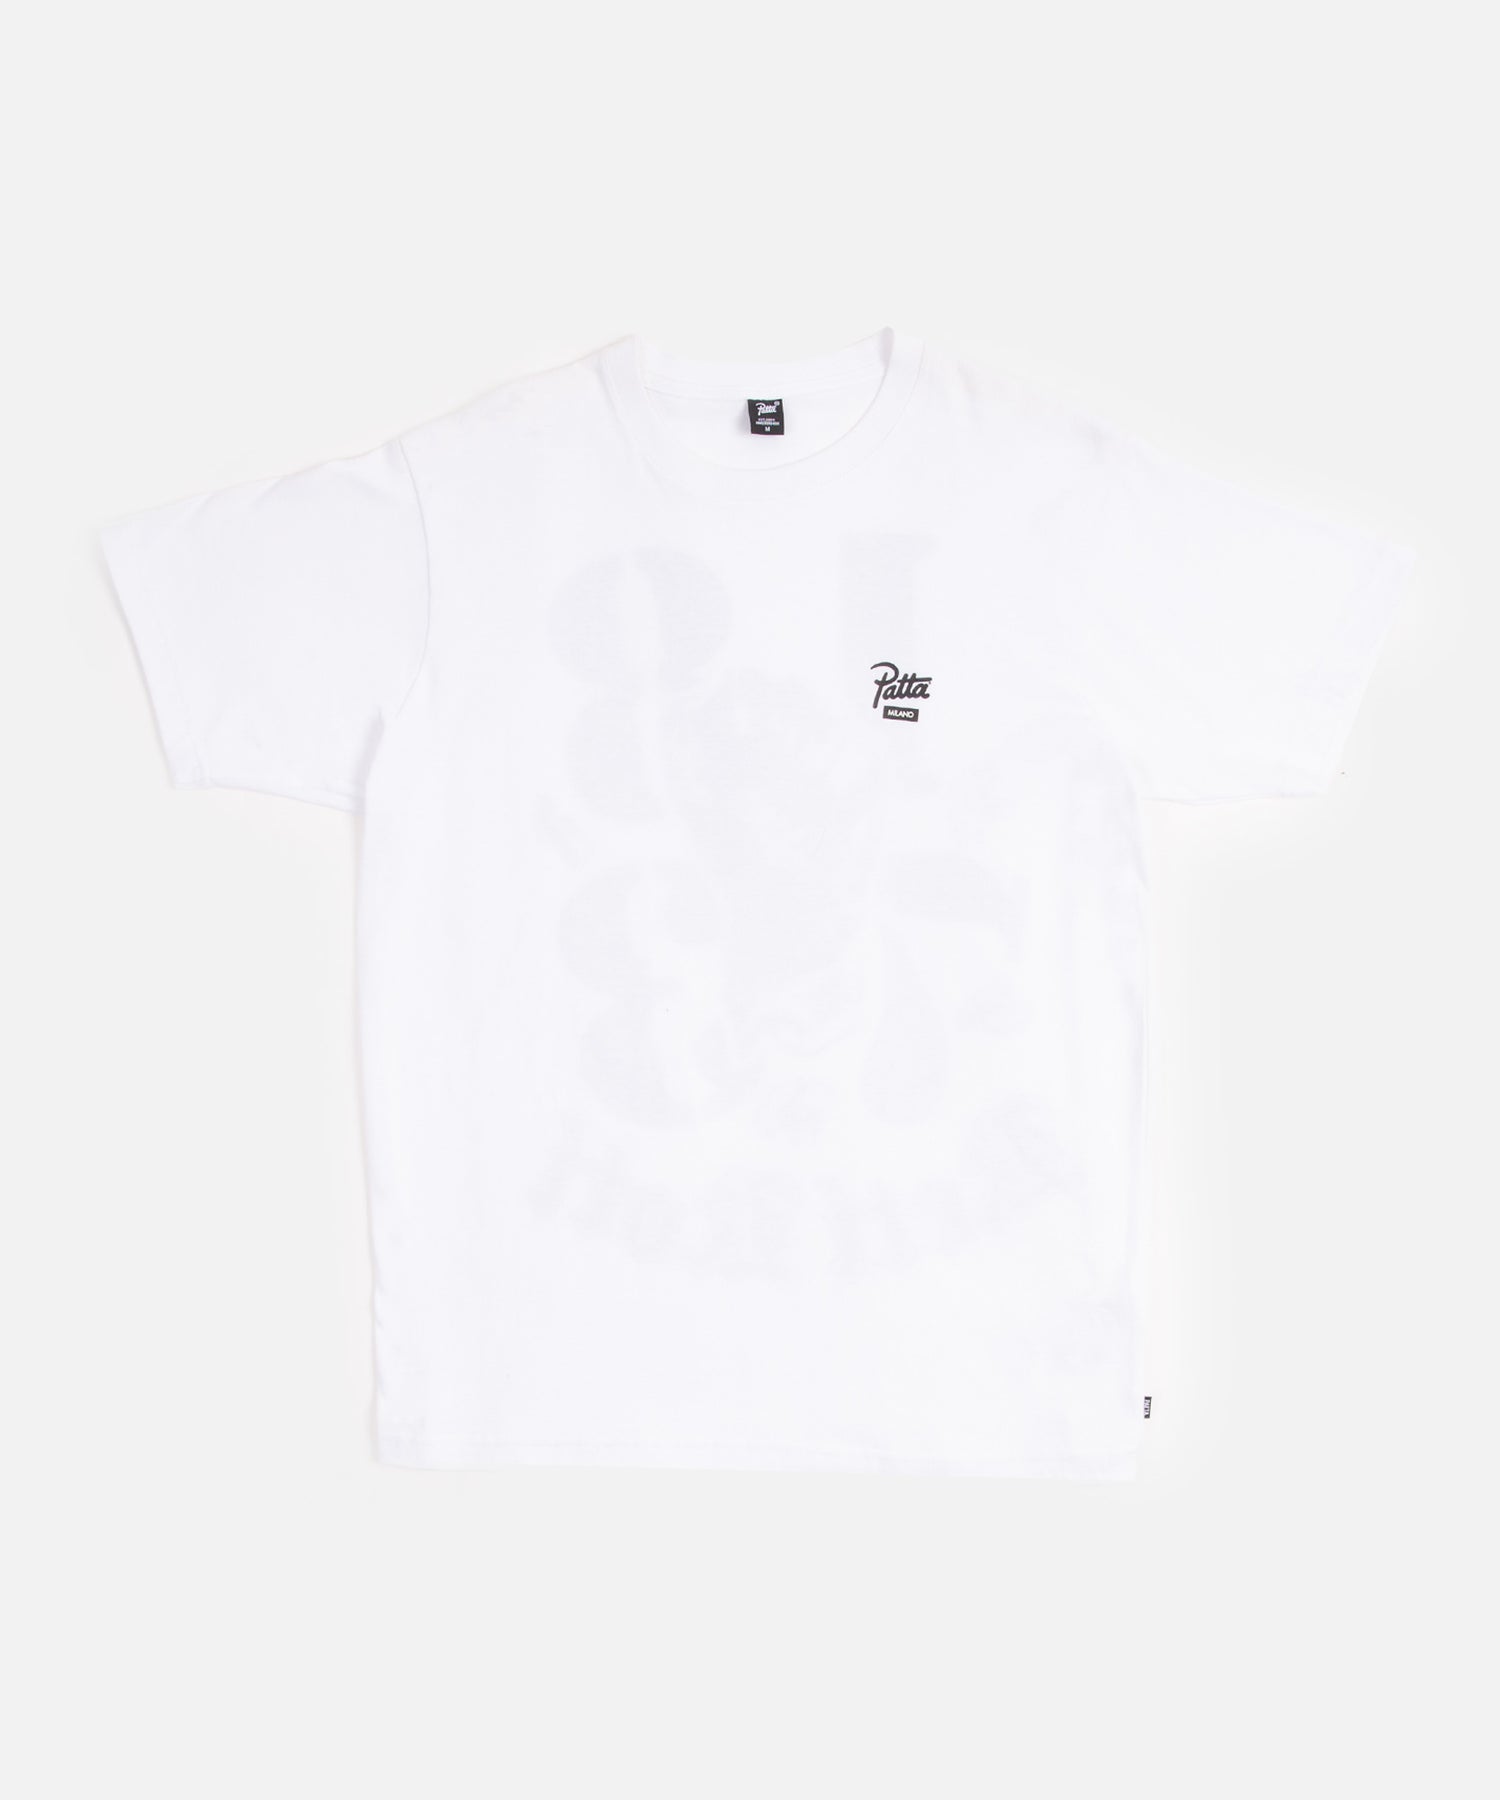 IN-STORE EXCLUSIVE: Patta Milano Keti Koti T-Shirt (White)